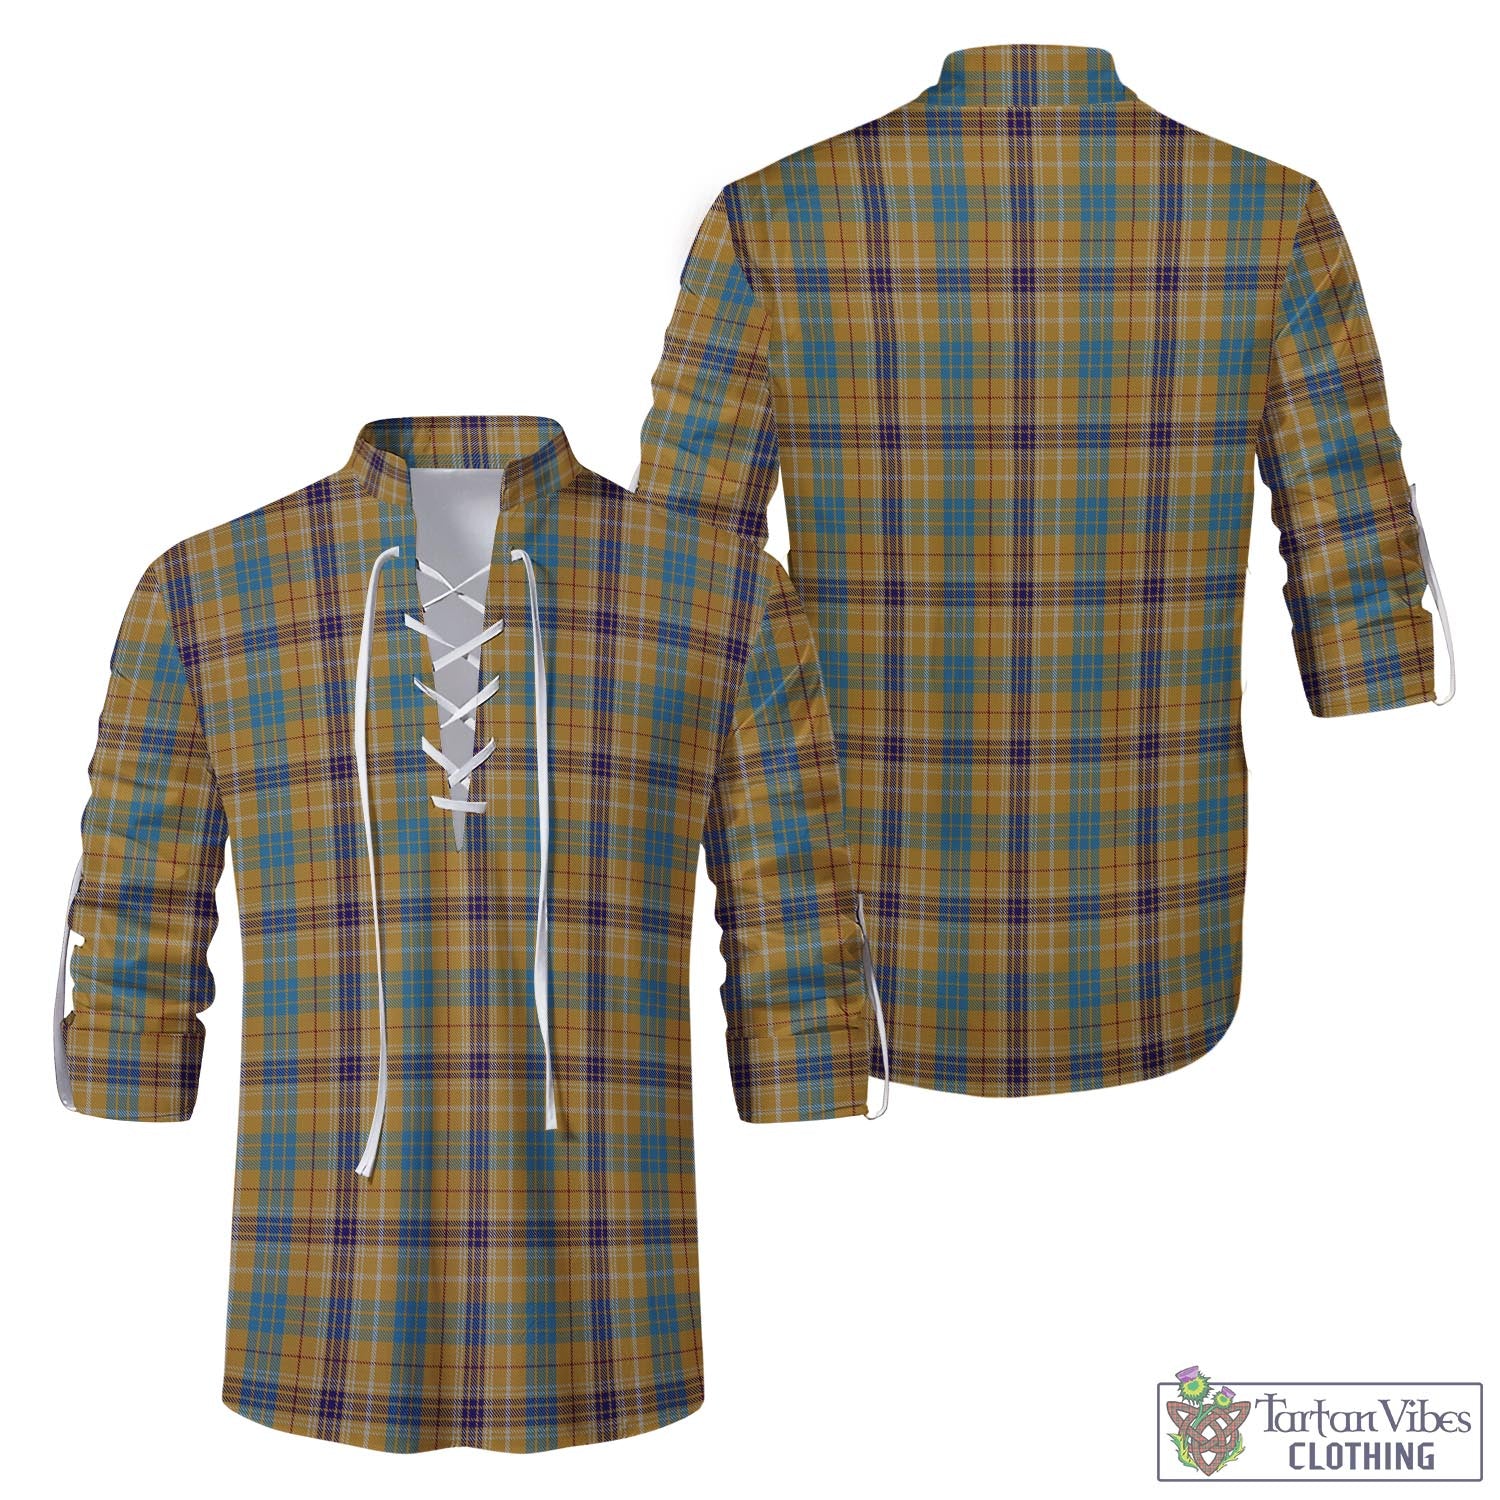 Tartan Vibes Clothing Ottawa Canada Tartan Men's Scottish Traditional Jacobite Ghillie Kilt Shirt